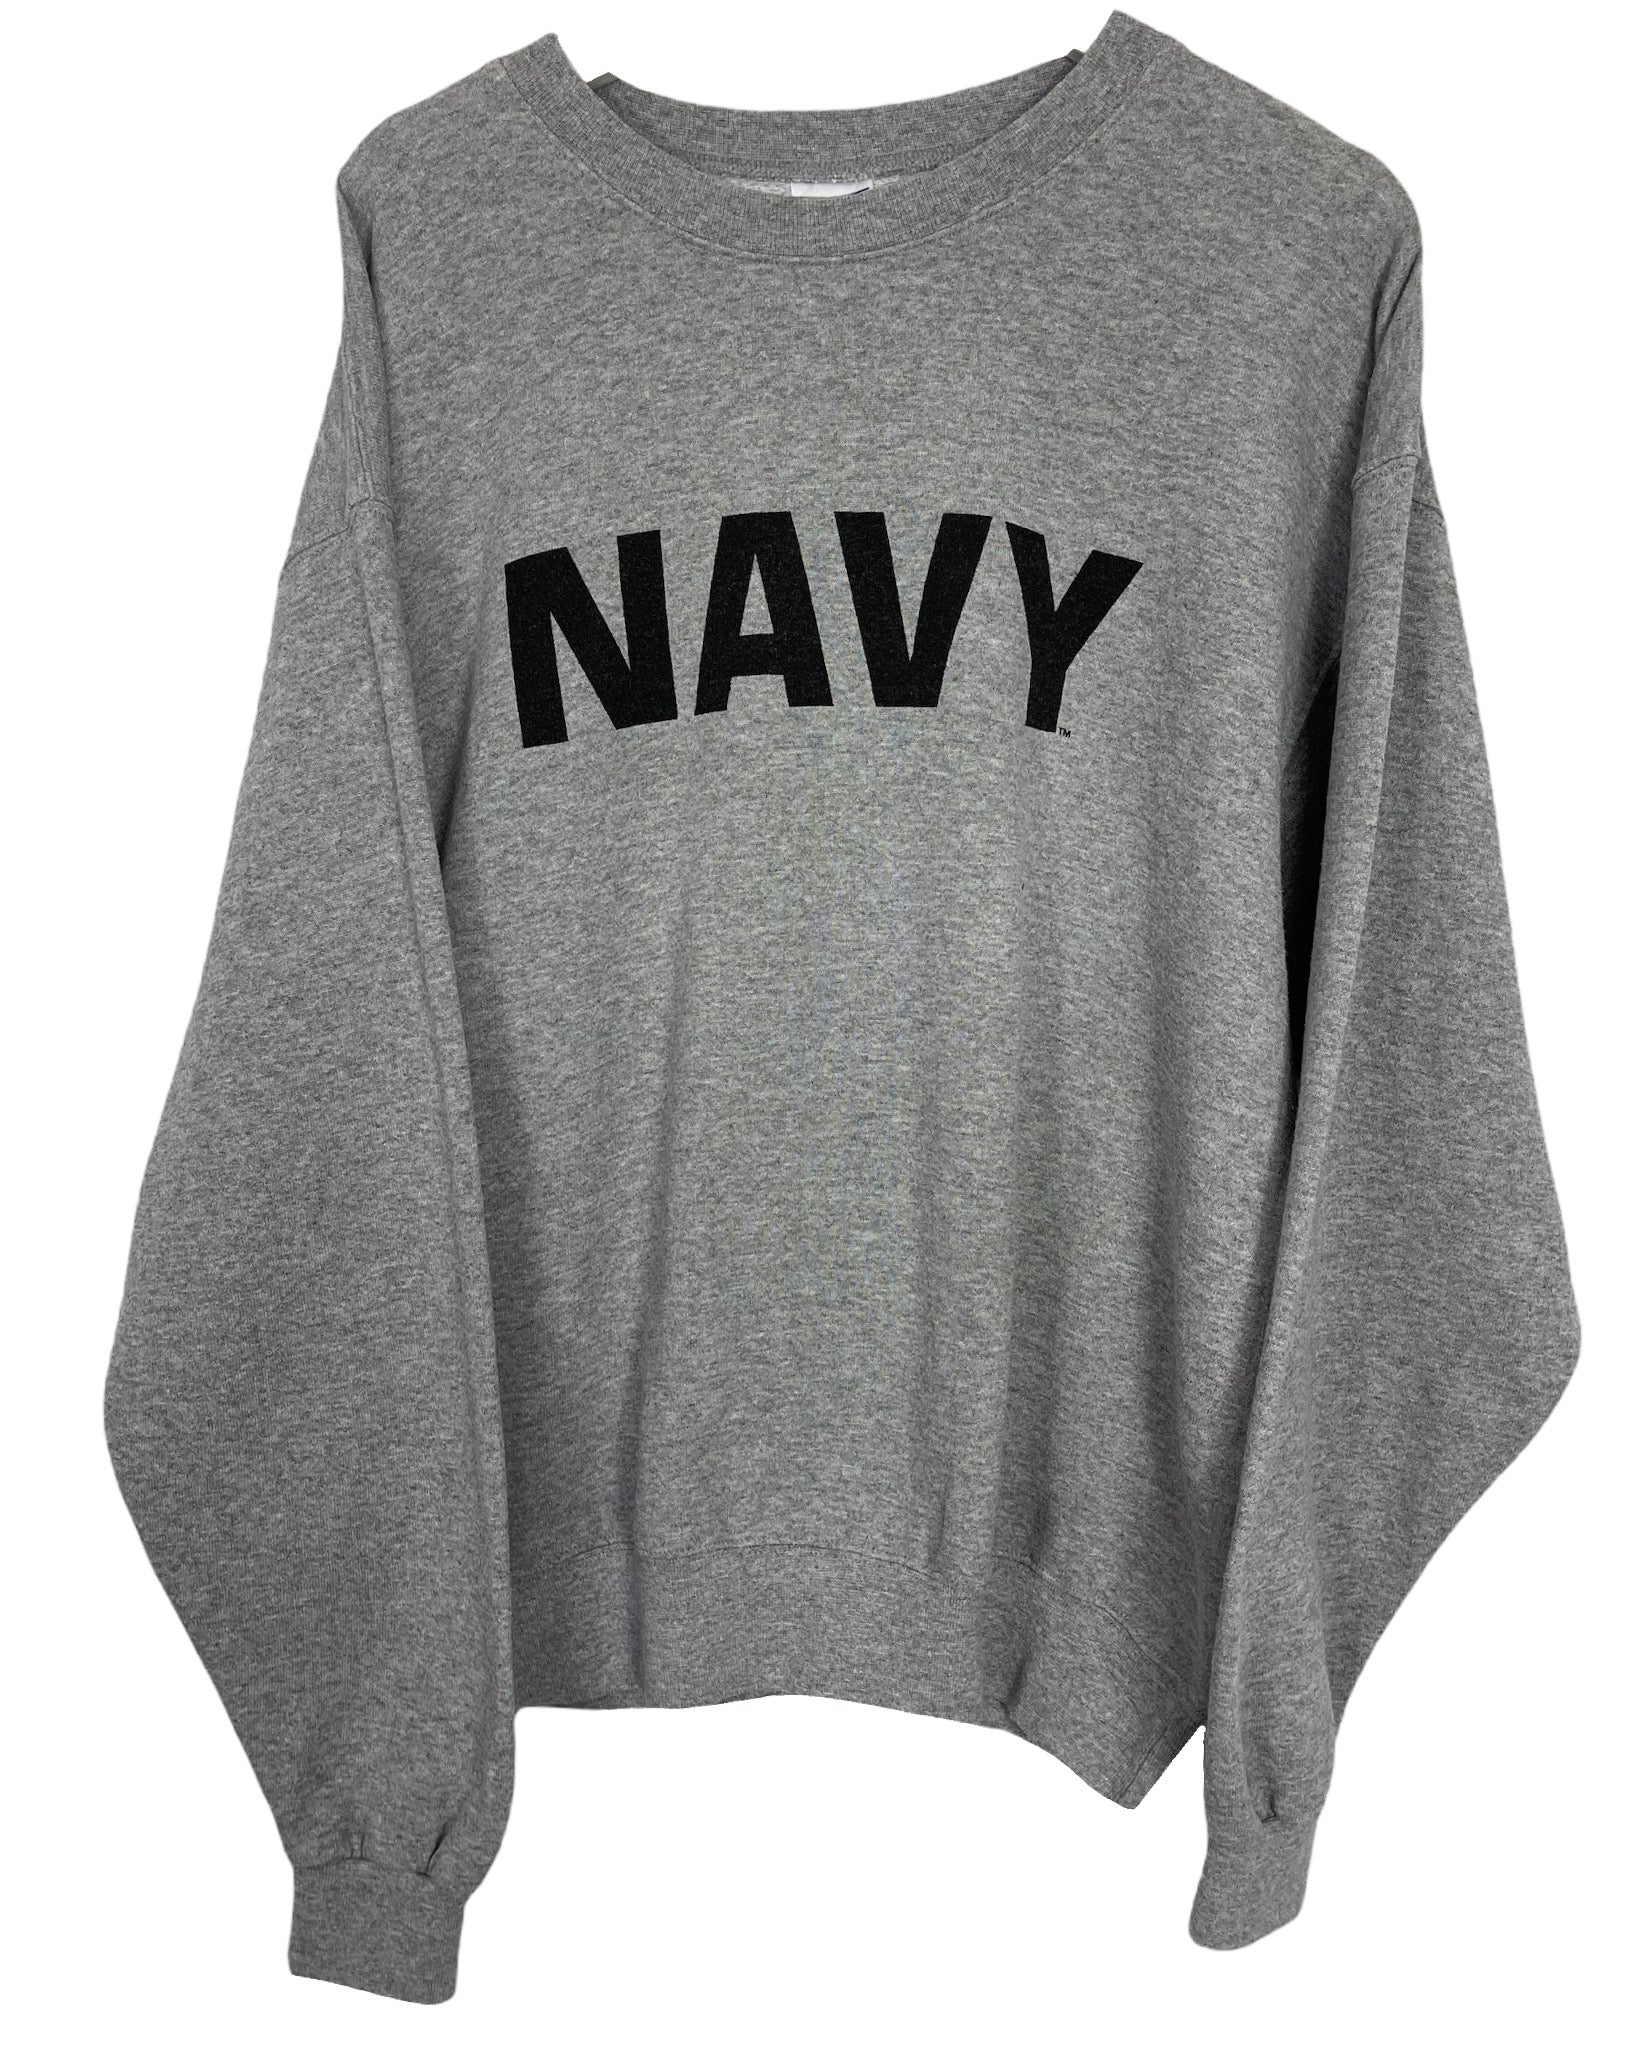  Sweatshirt Vintage Sweat - Naval Academy - L - PLOMOSTORE